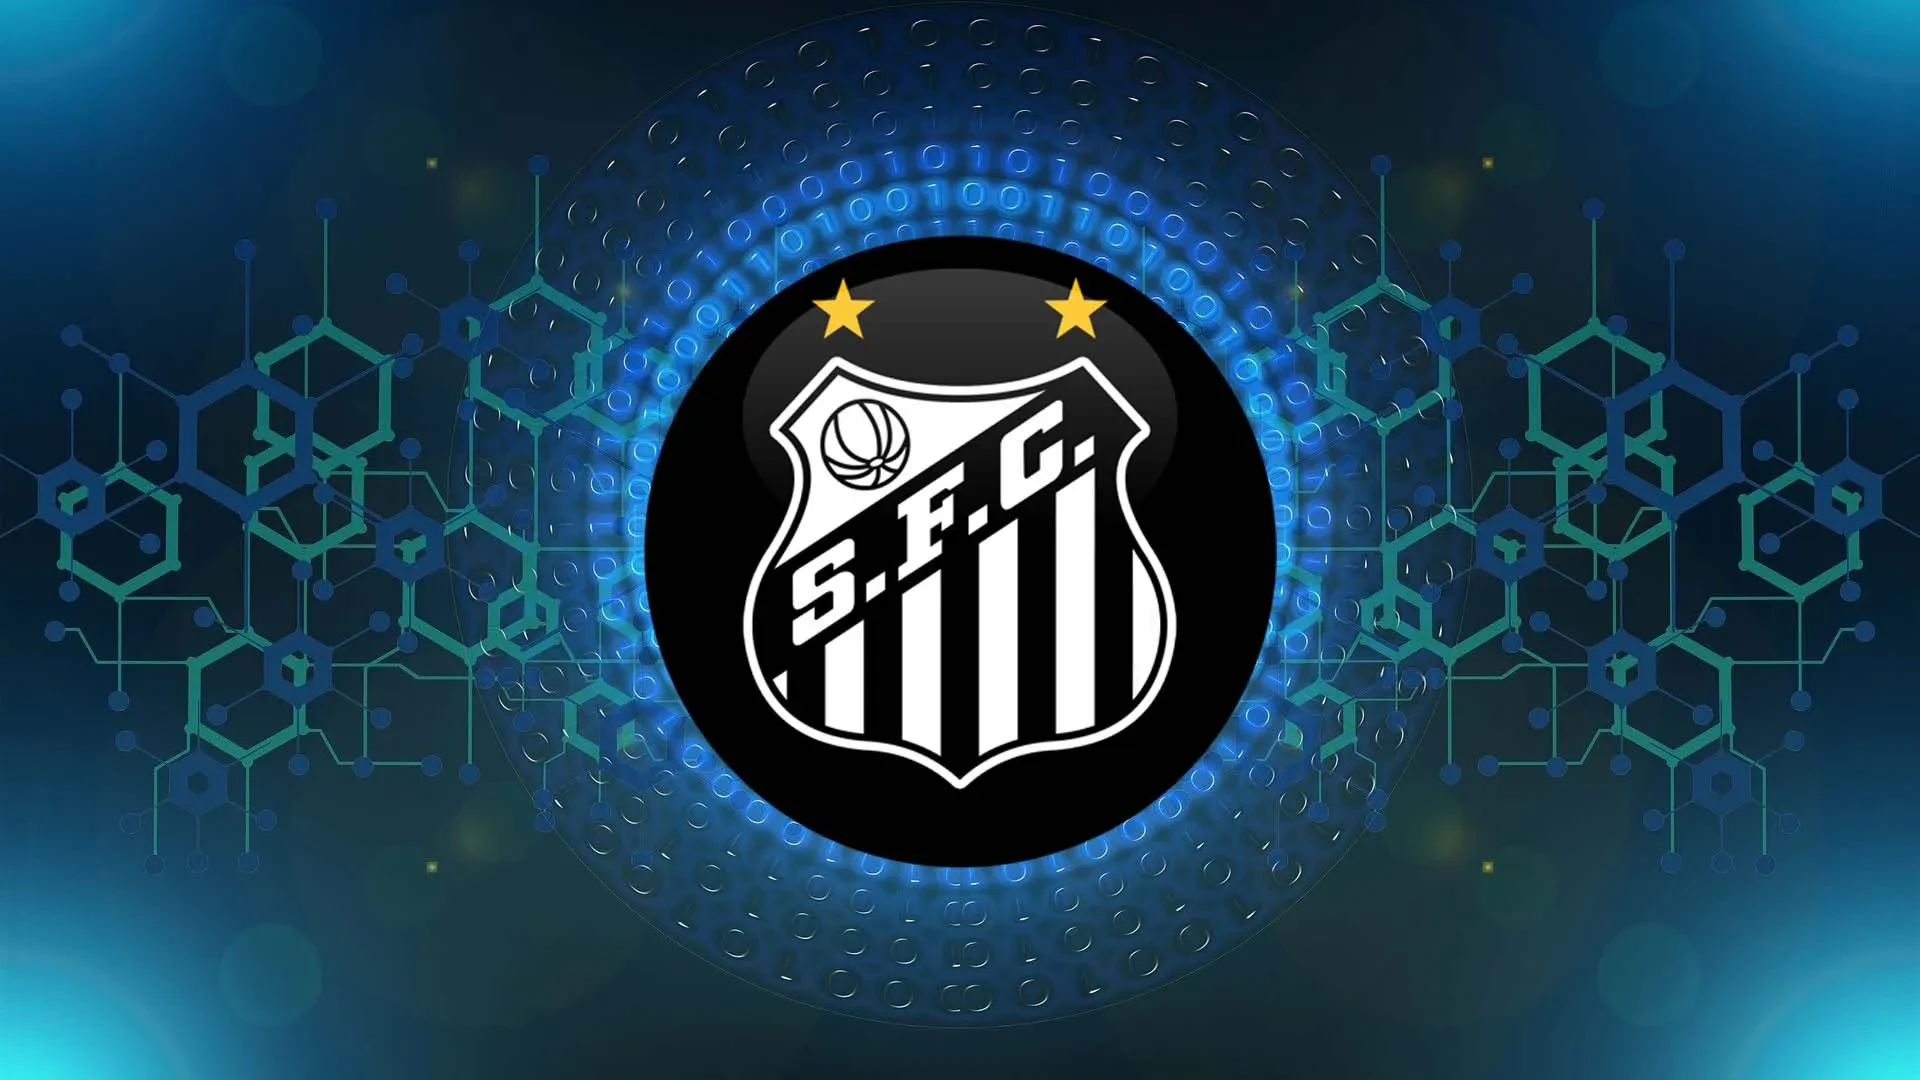 What is the Santos FC Fan Token (SANTOS)?